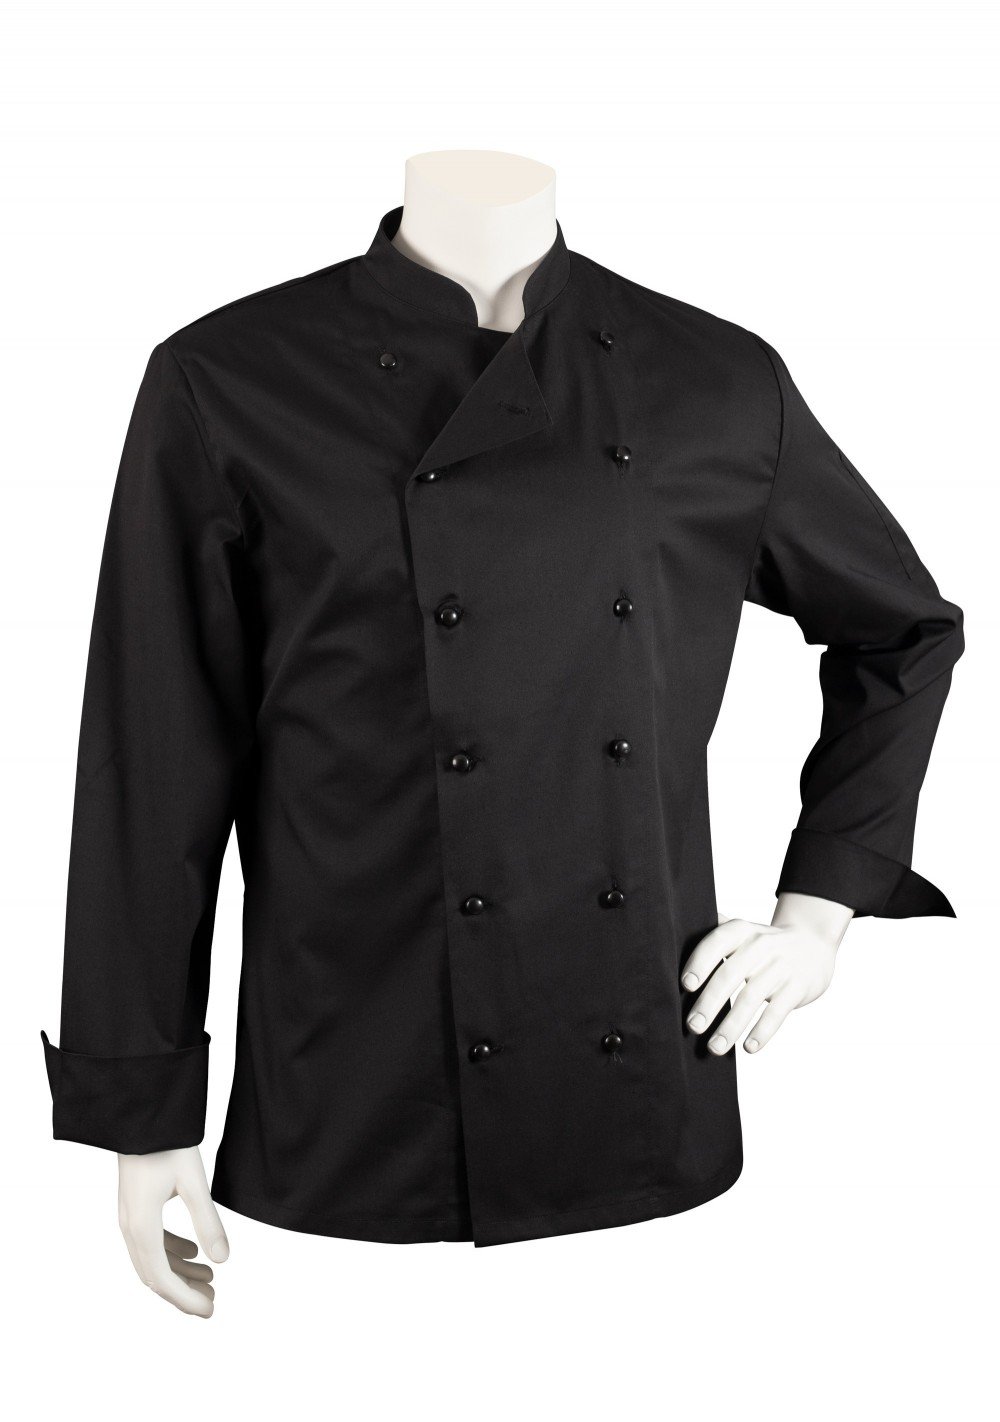 Details about   Chef Works Unisex Palermo Executive Chef Coat Medium Black 